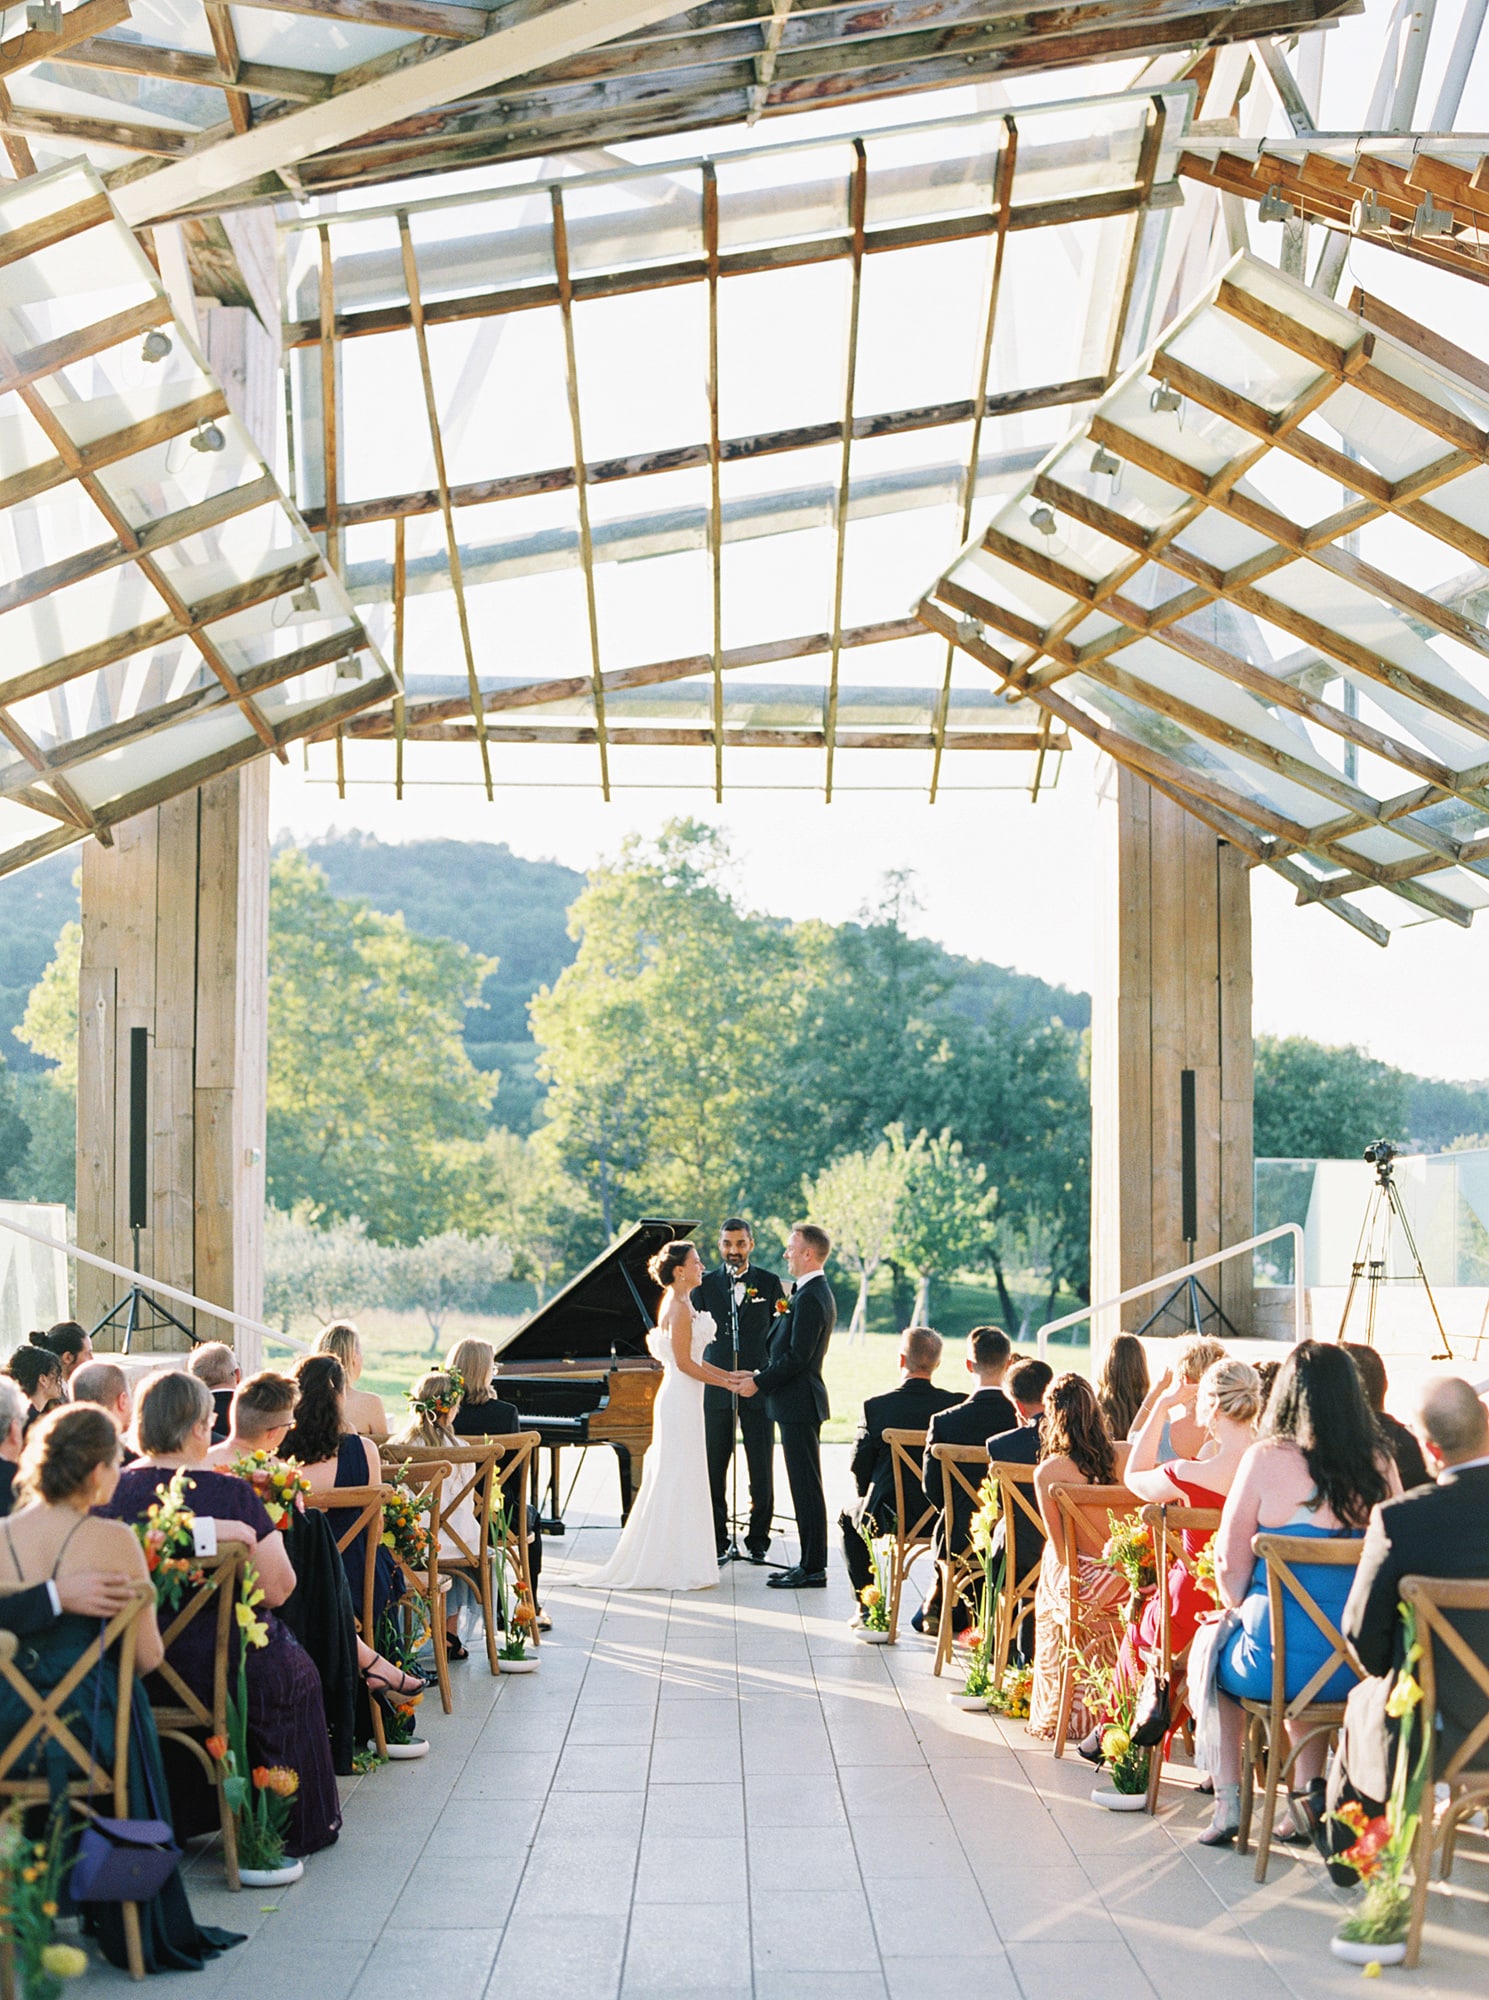 WEP wedding venue - Wedding Planner Provence